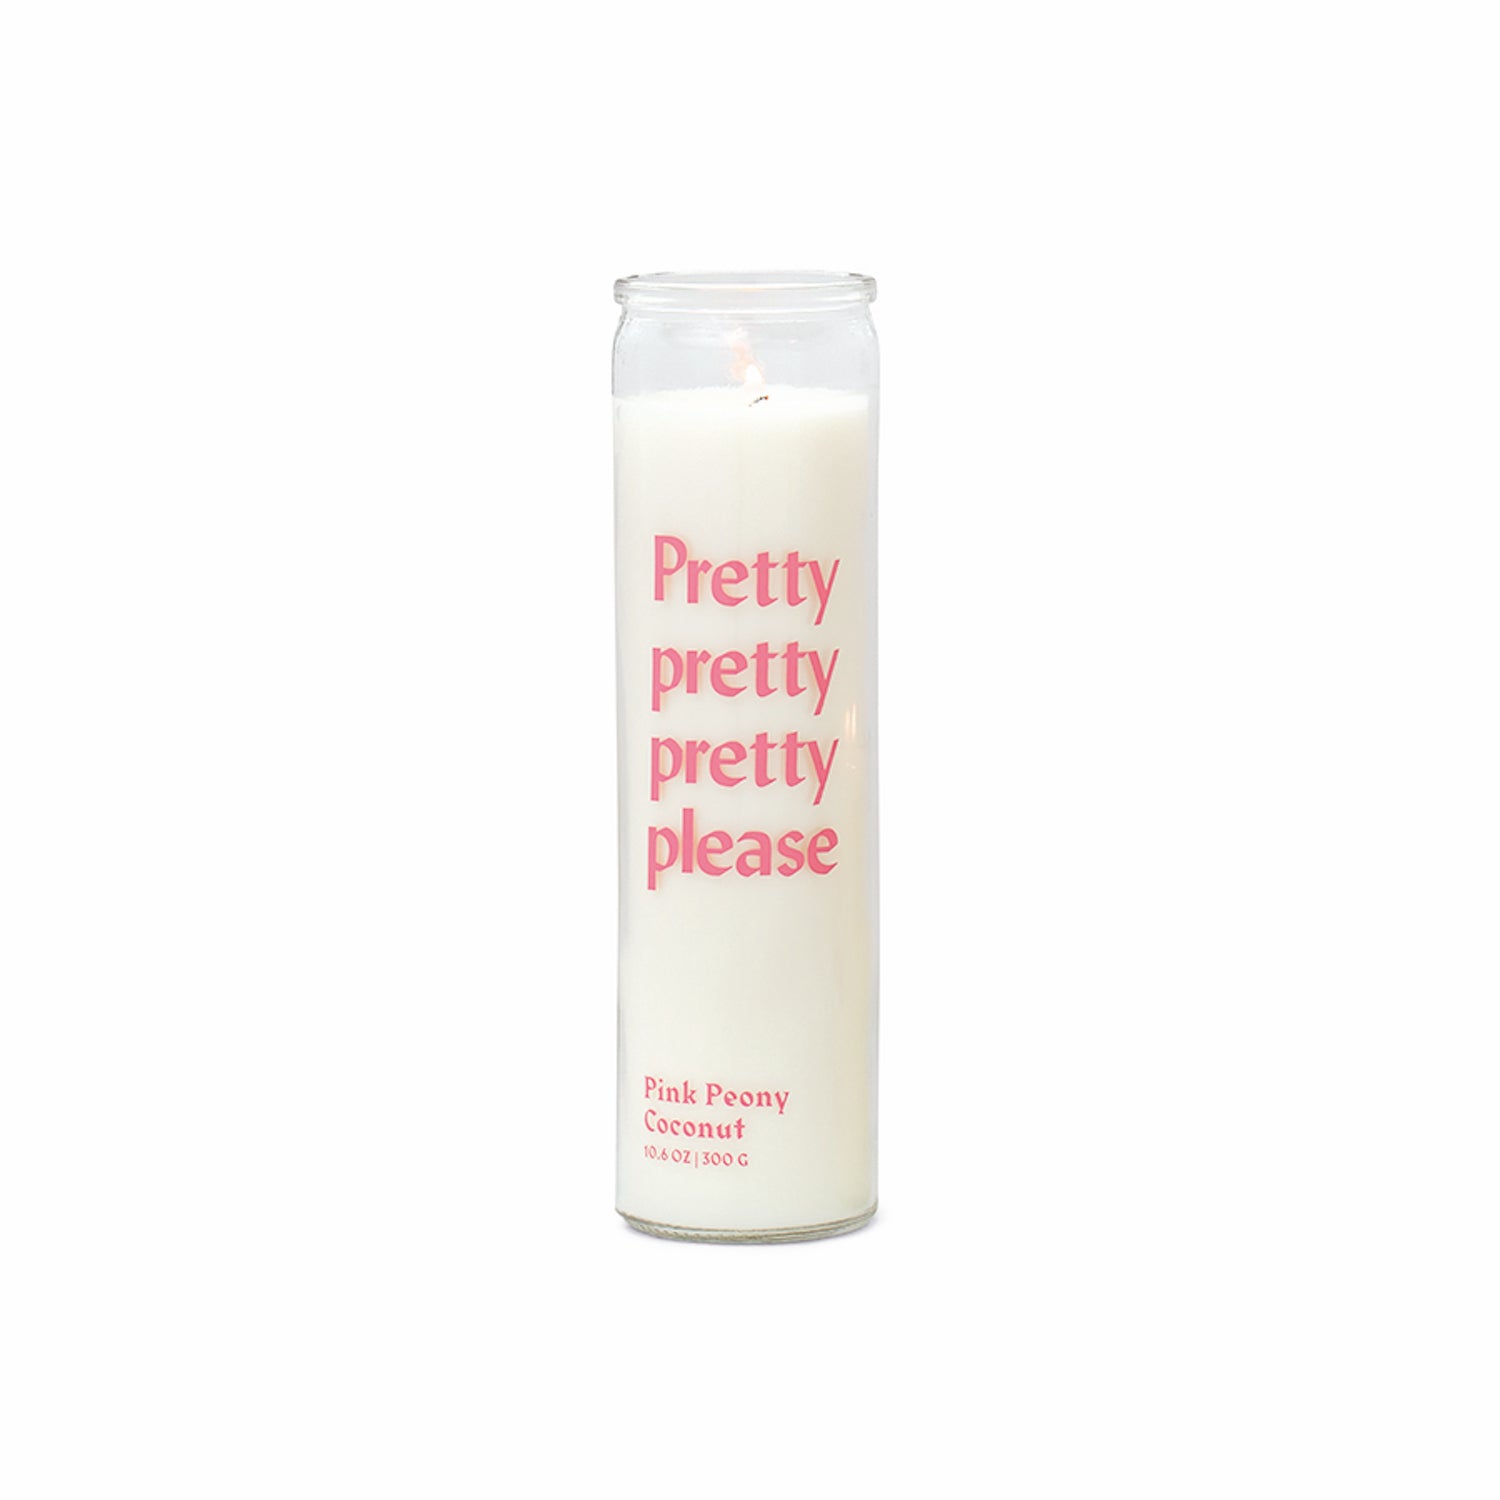 Paddy Wax Spark Candle (300g) - Pretty Pretty Pretty Please - Pink Peony Coconut